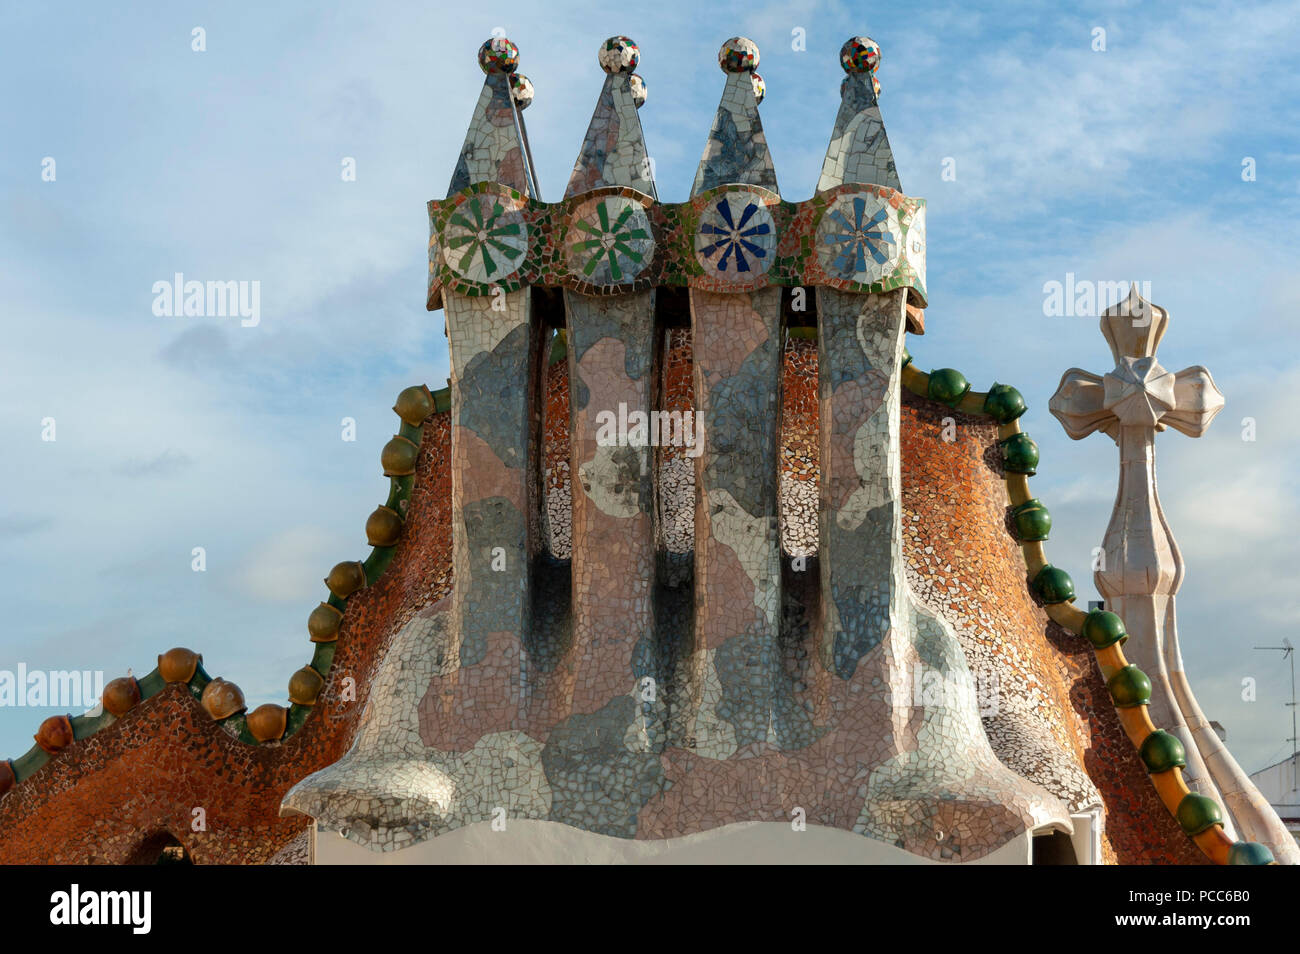 Barcelona, Casa Batlló. Kamine. Architekt: Antonio Gaudí Cornet, 1904-1906 Foto de stock